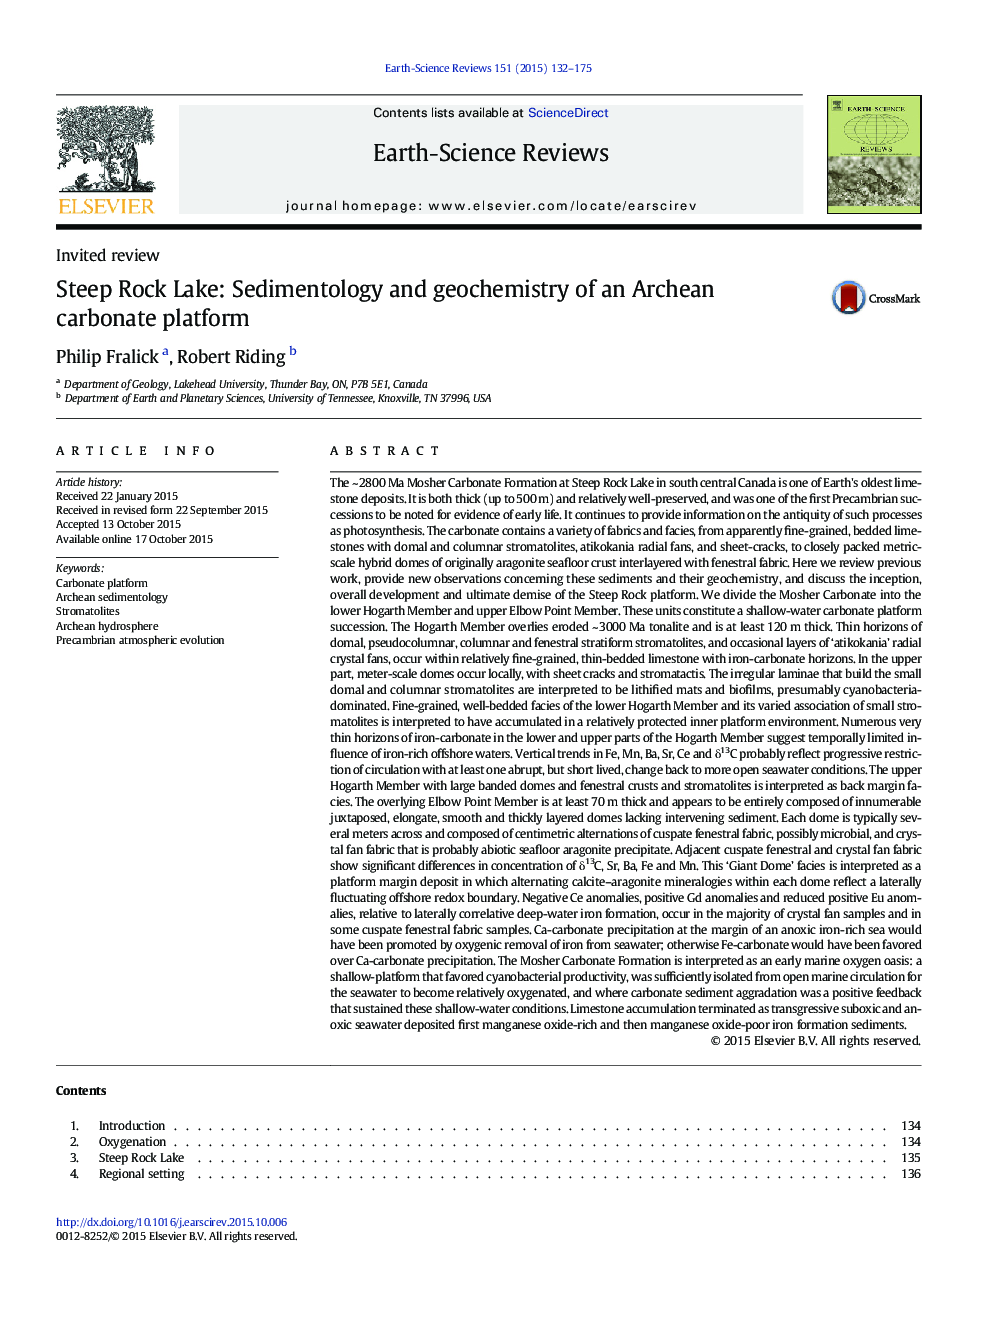 Steep Rock Lake: Sedimentology and geochemistry of an Archean carbonate platform